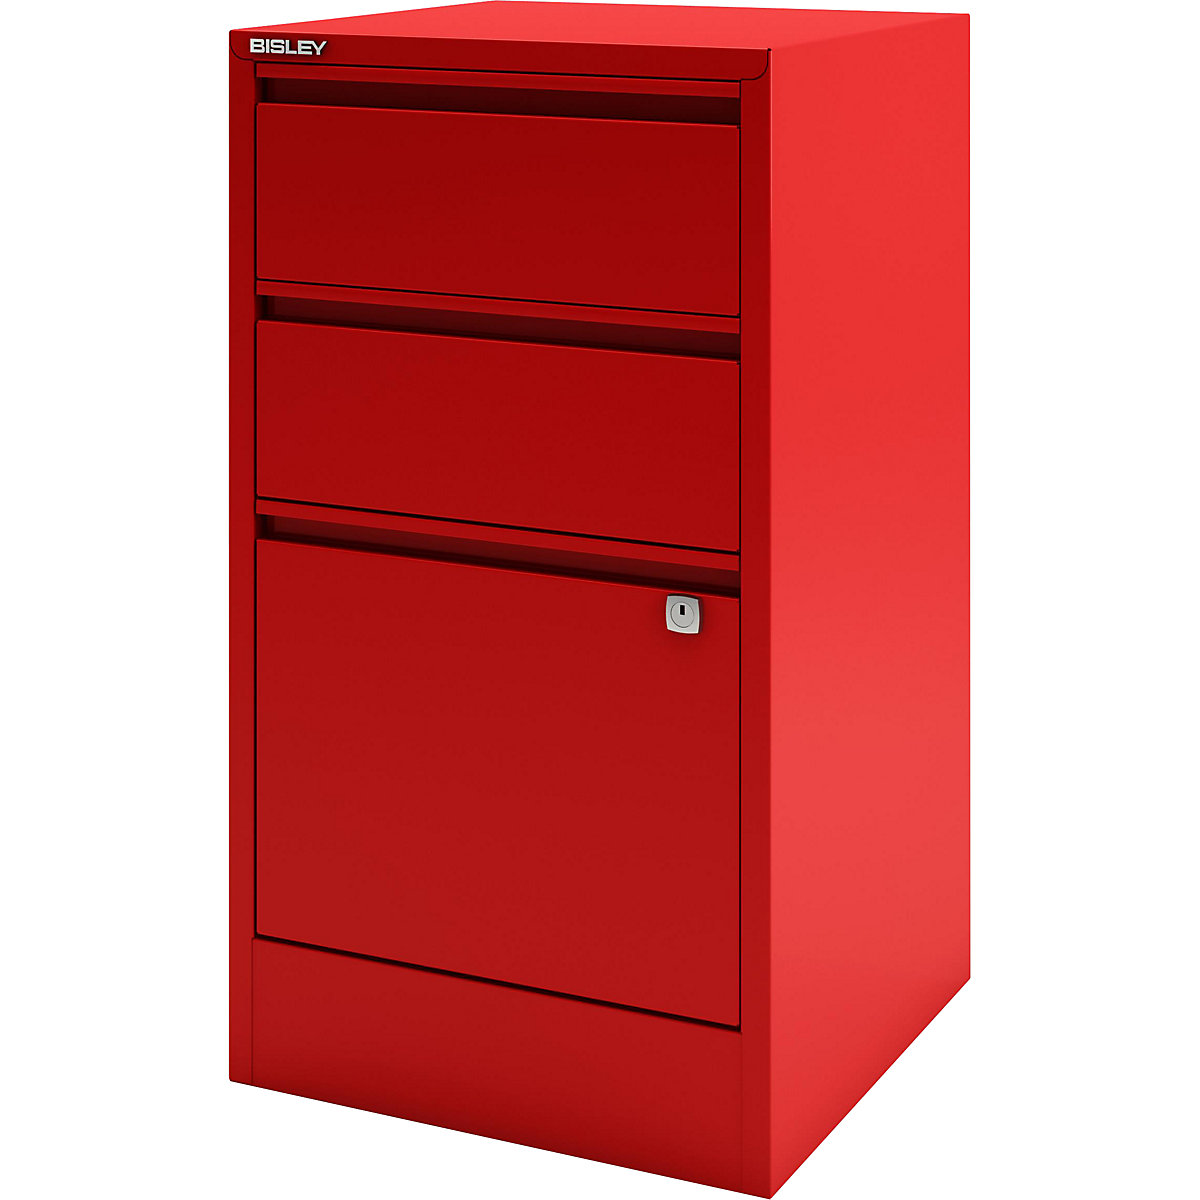 HomeFiler suspension filing cabinet – BISLEY, 2 drawers, 1 suspension file drawer, cardinal red-5